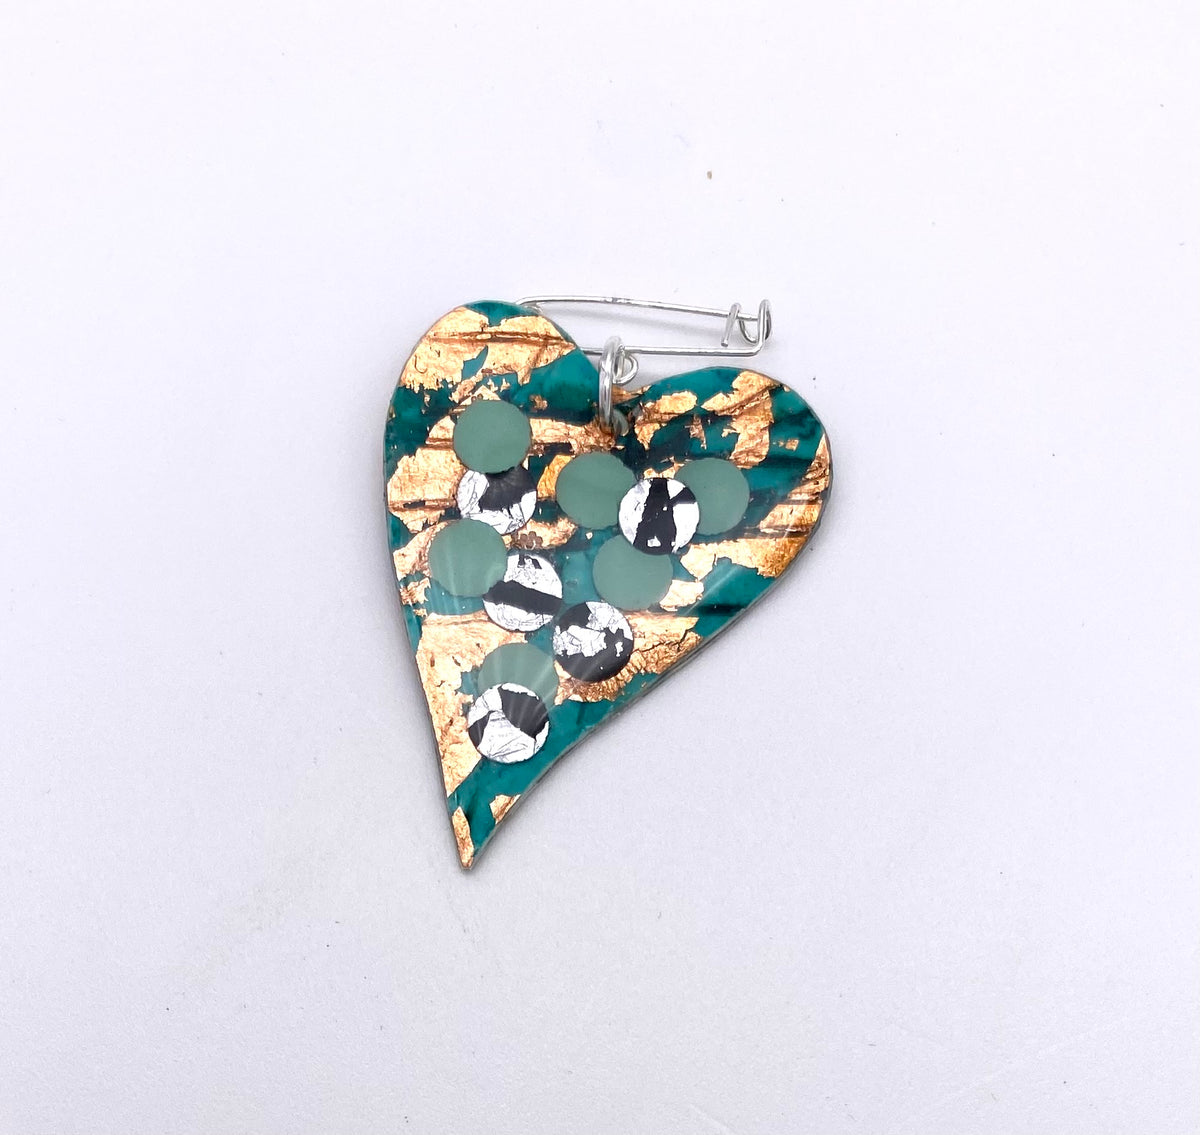 Crush sgraffito pin brooch in seagreen/rose-gold/black/silver